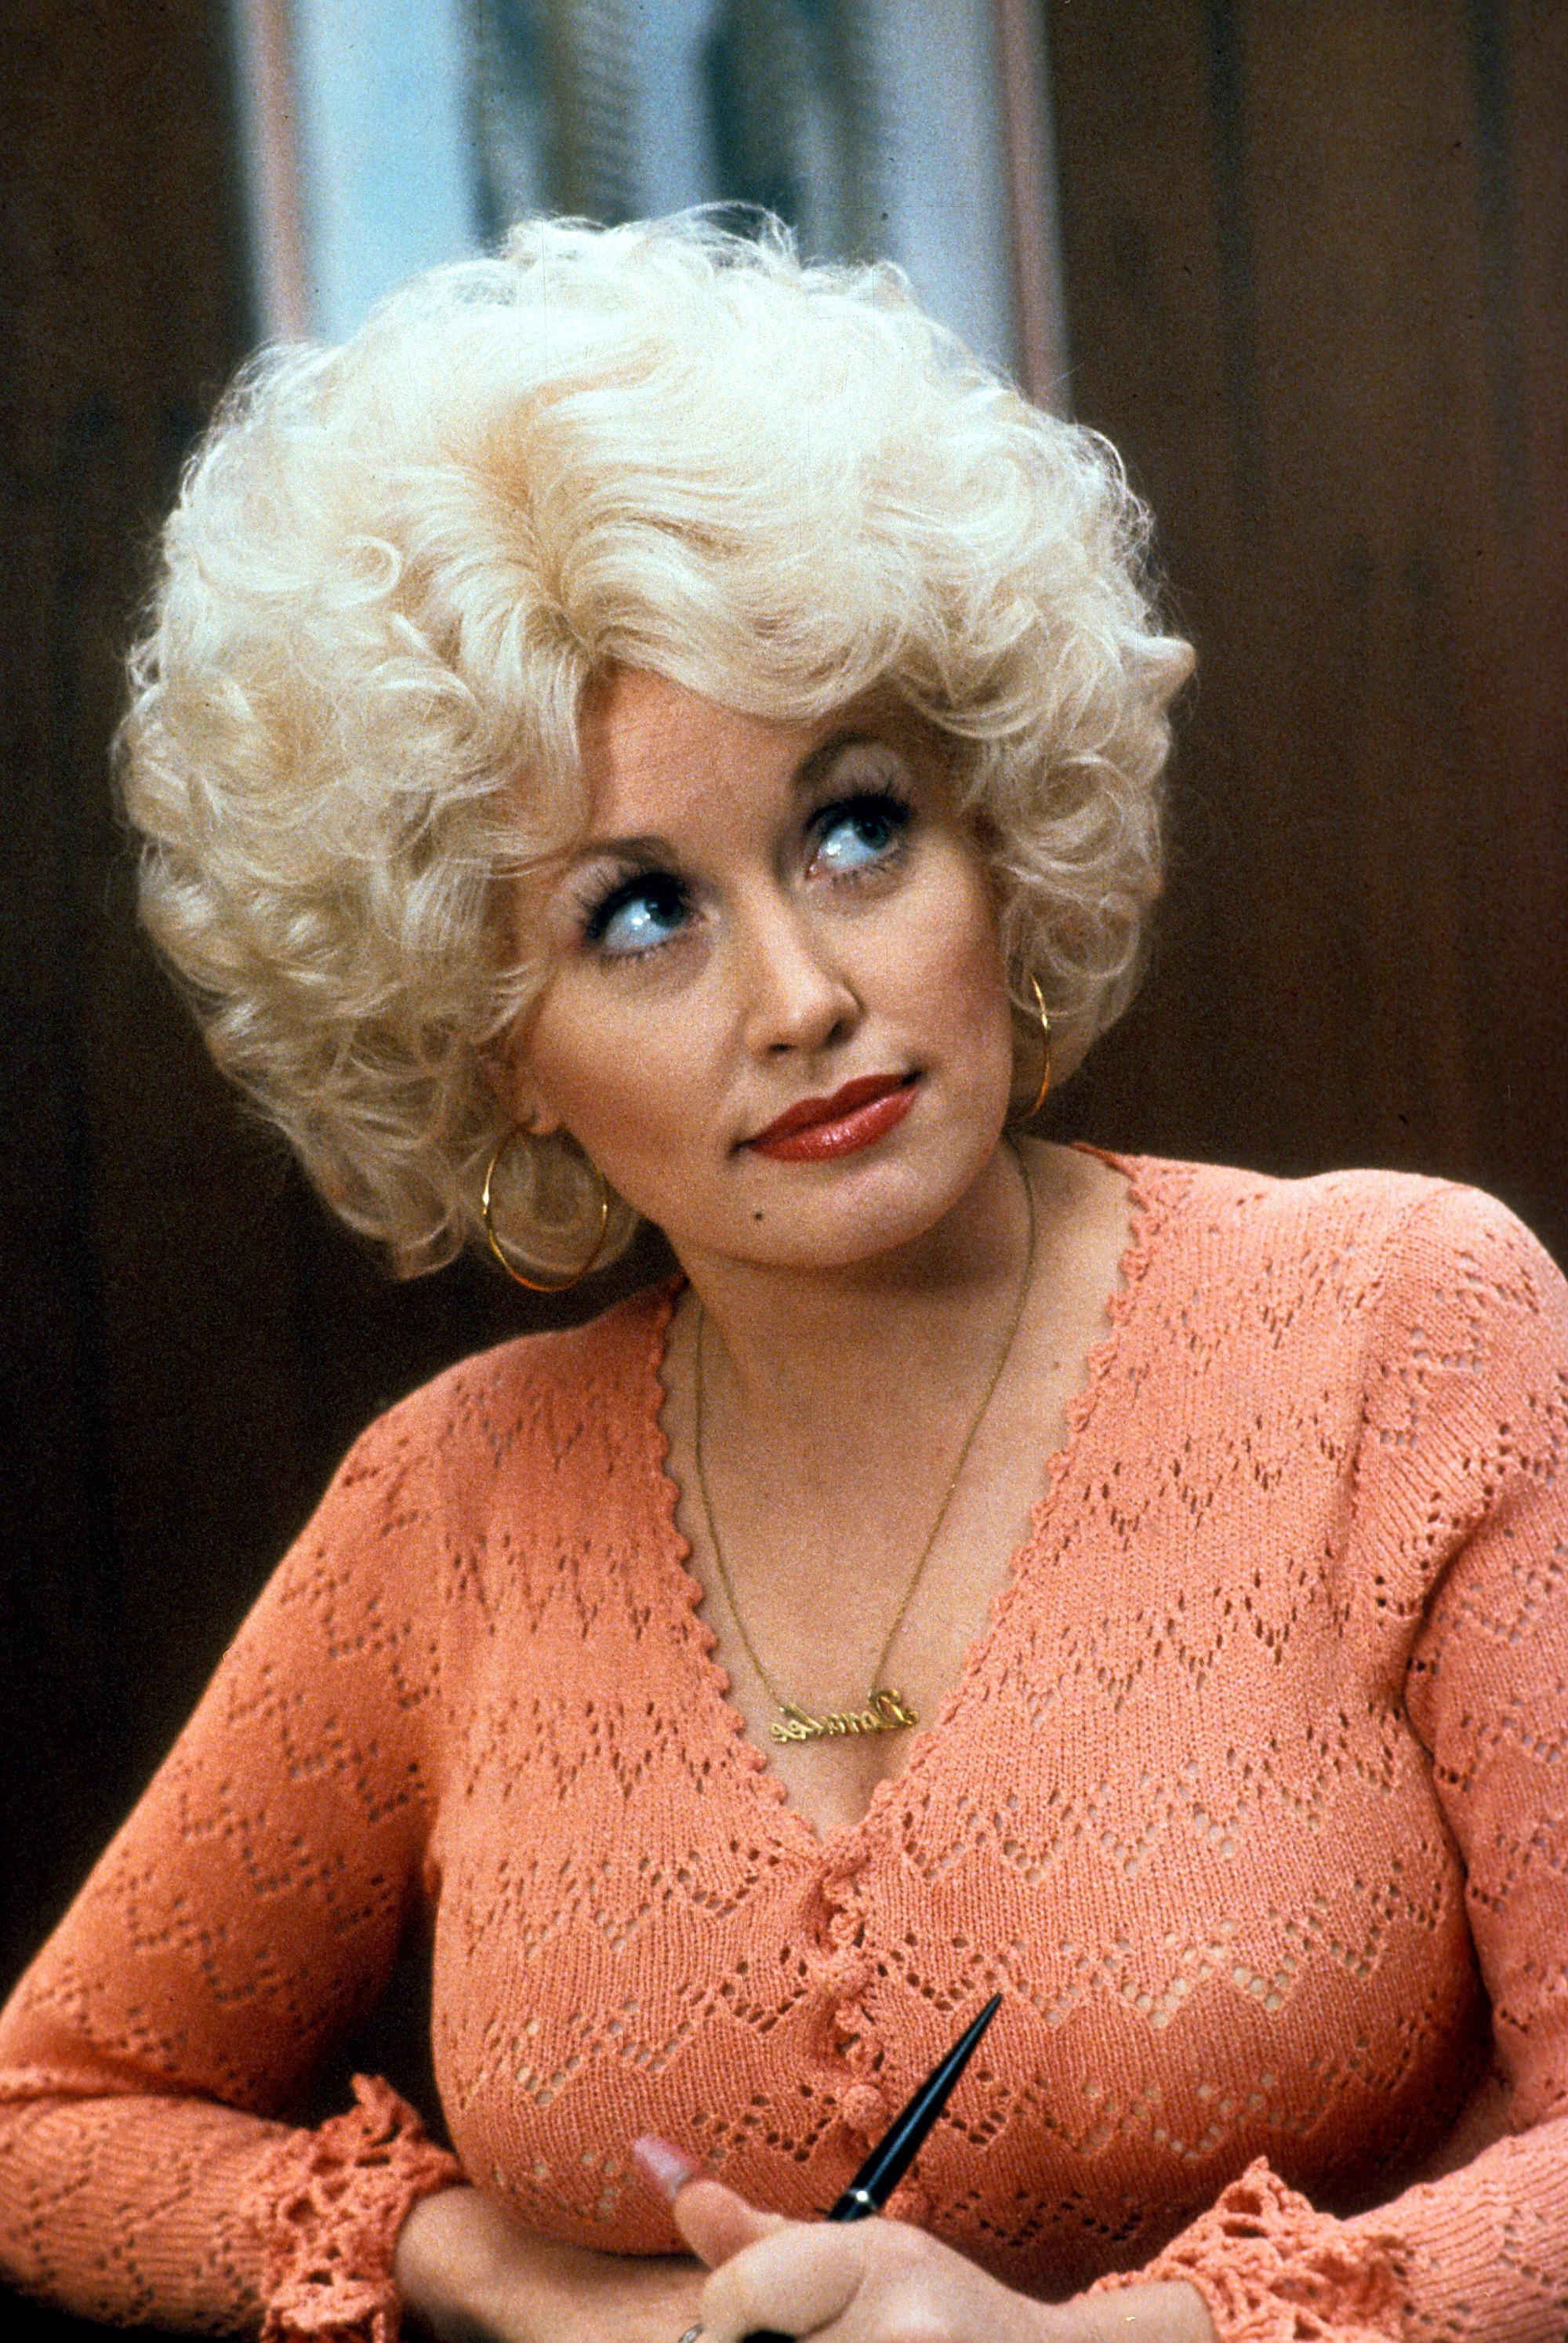 9 to 5: Dolly Parton